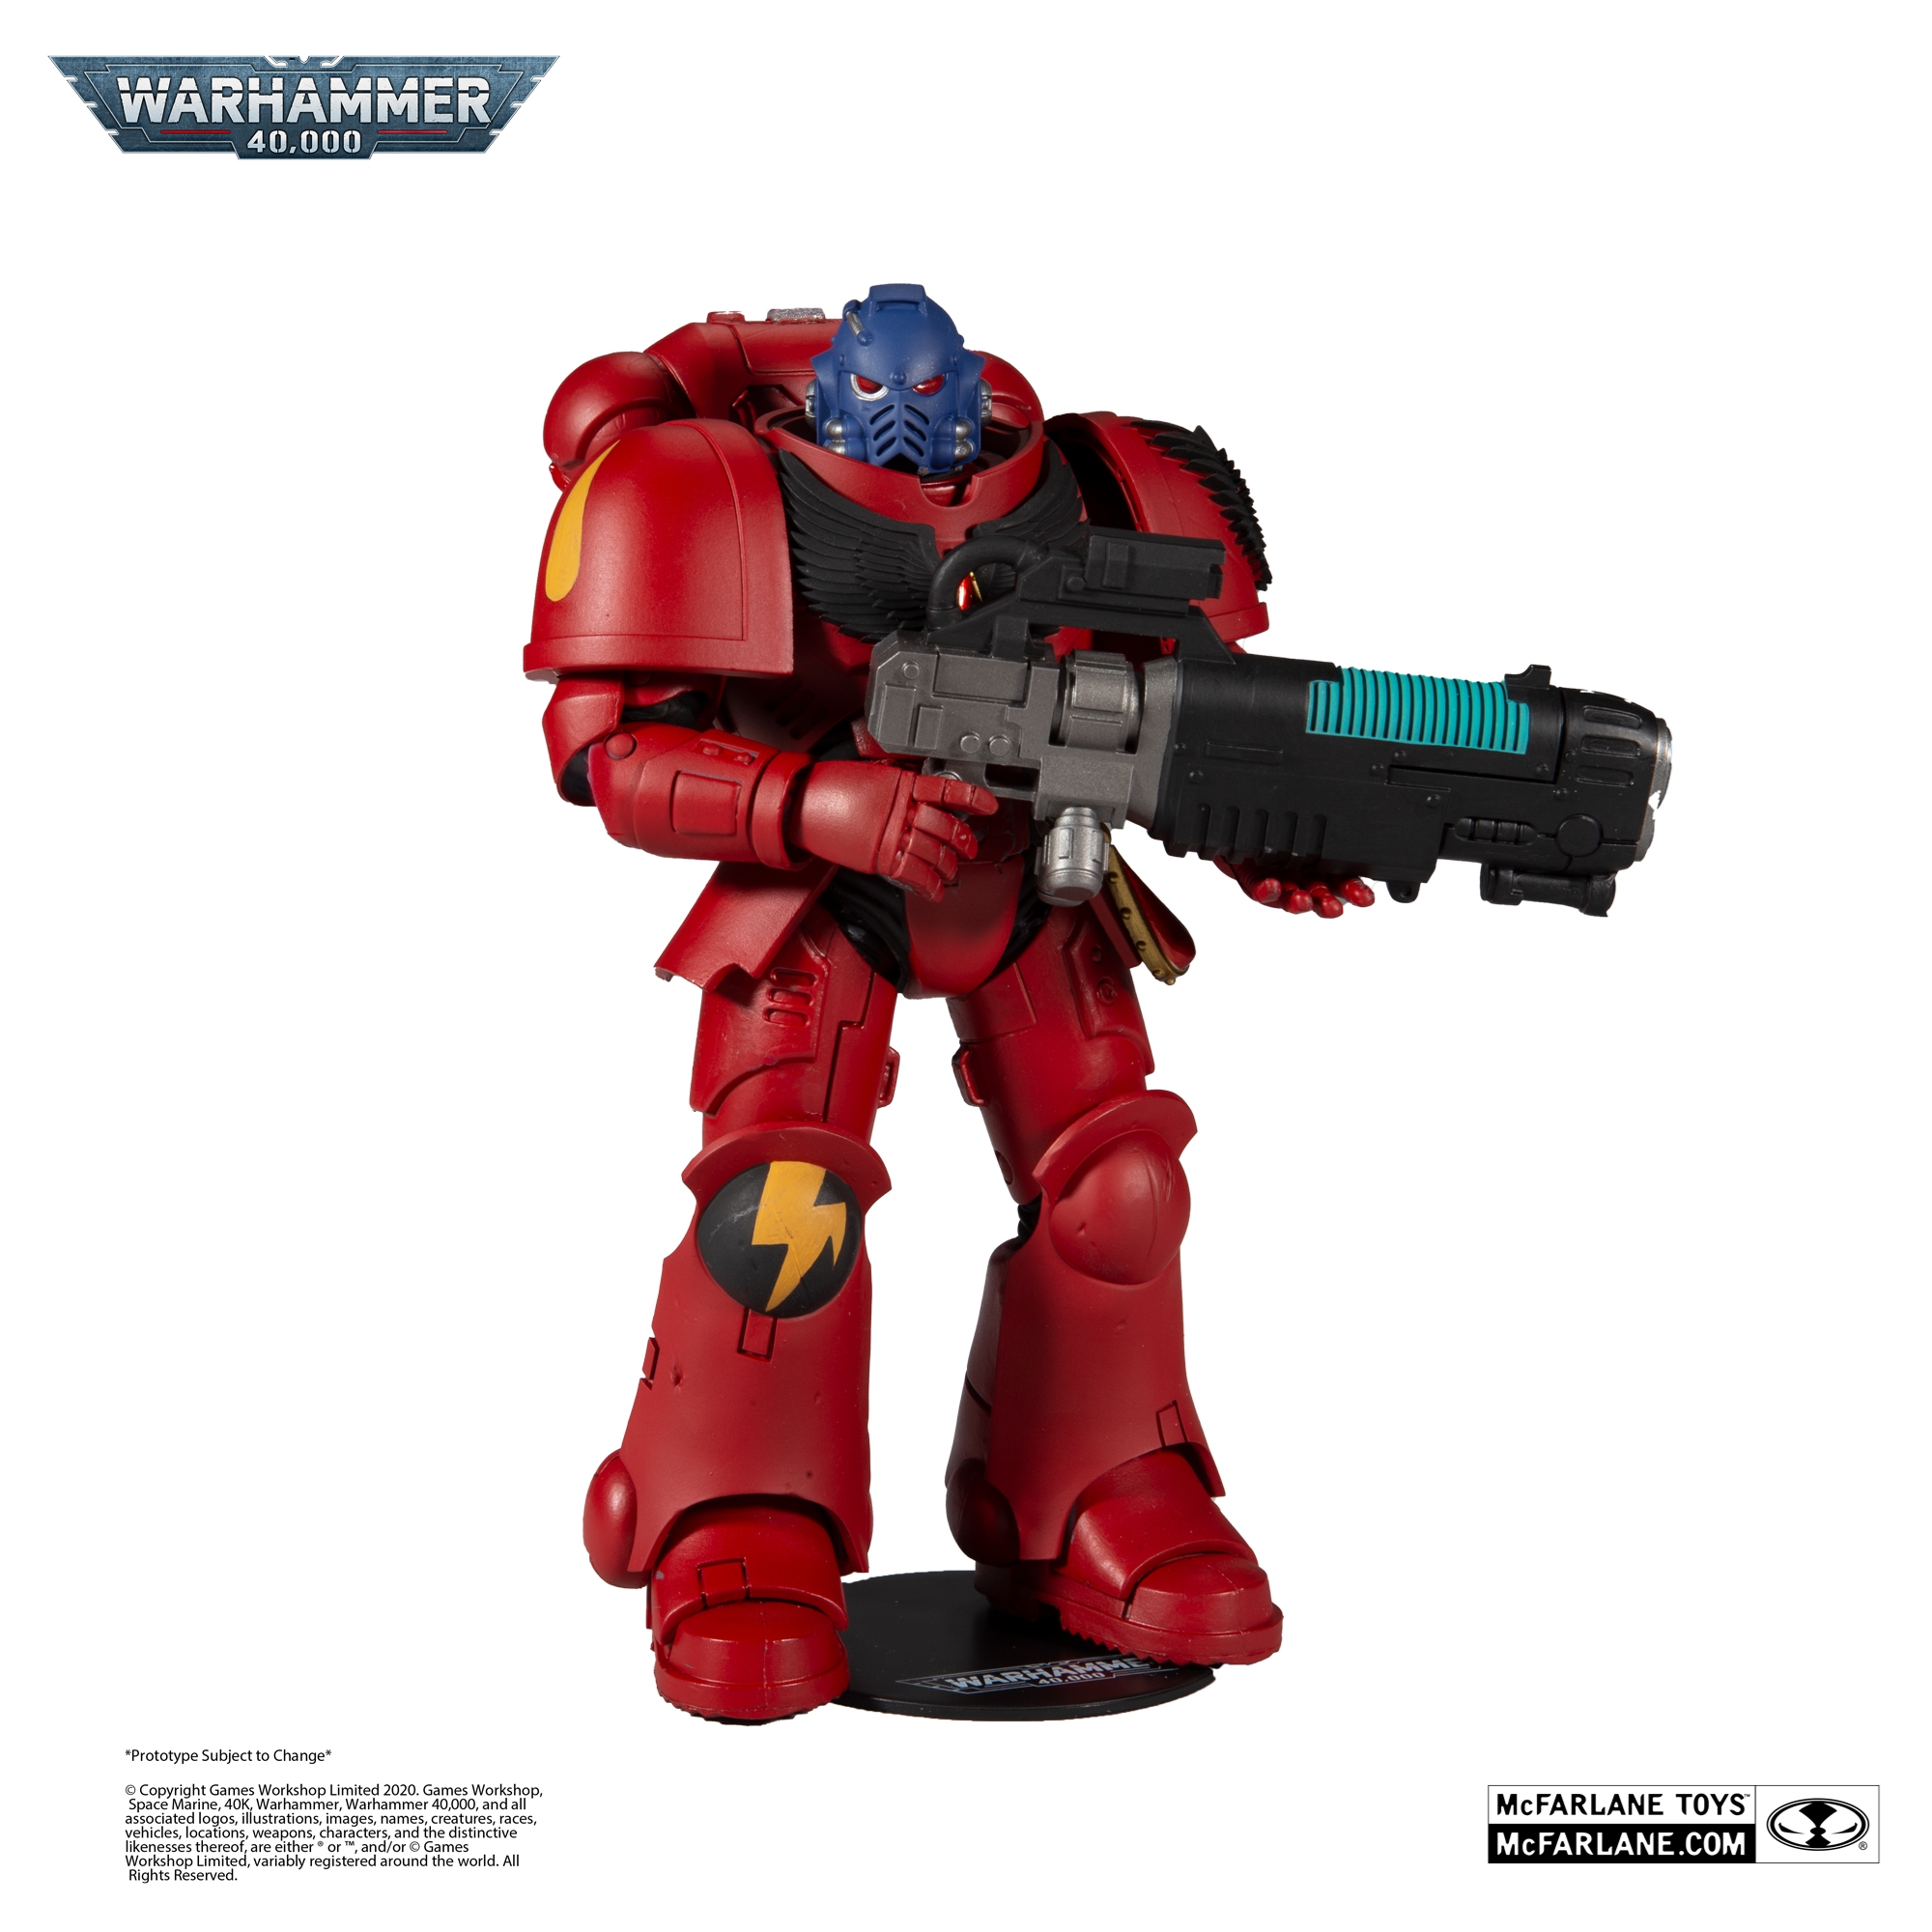 McFarlane Toys: Warhammer 40,000 - Space Marine: Blood Angels Hellblaster 